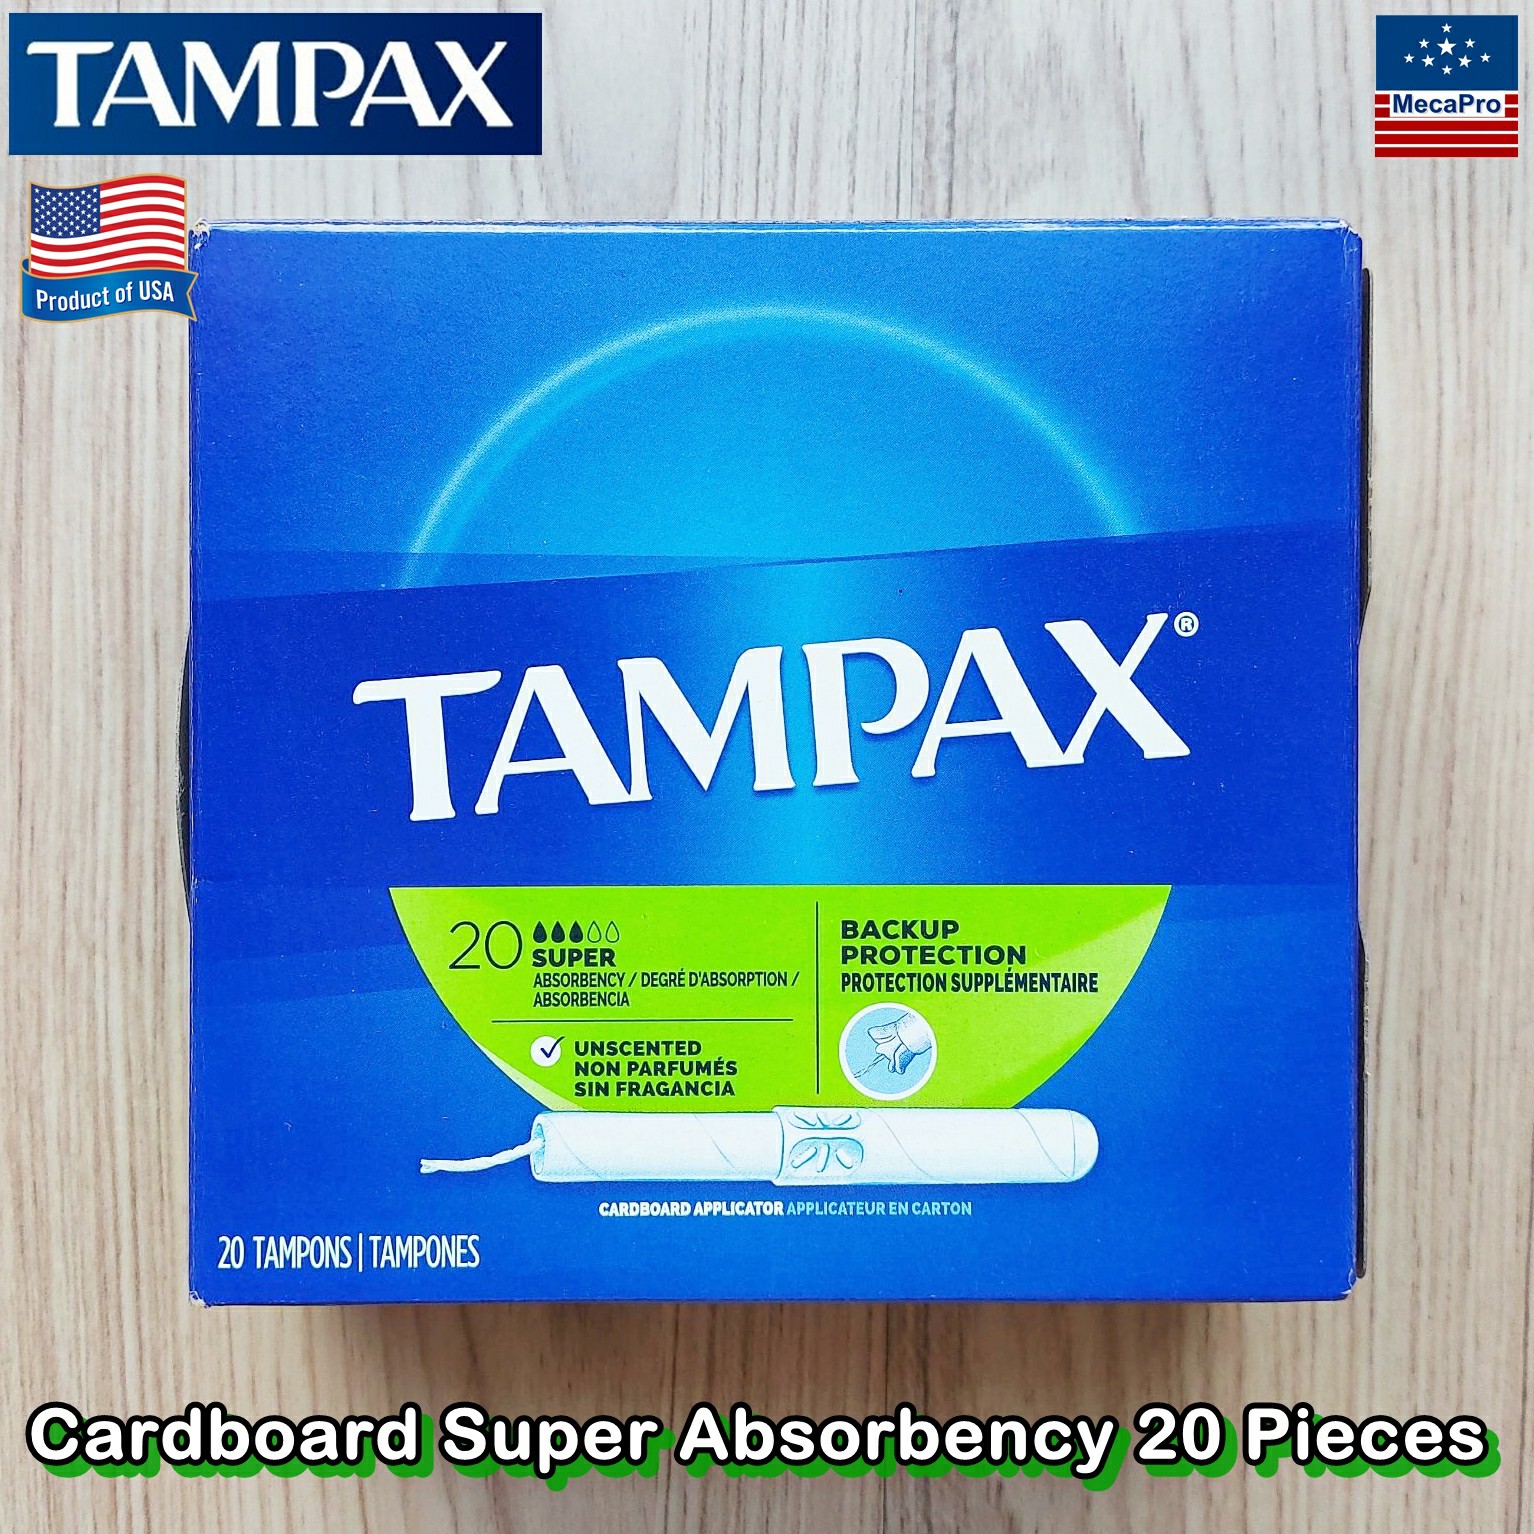 Tampax® Cardboard Applicator Tampons Super Absorbency 20 Pieces ผ้าอนามัยแบบสอด เหมาะกับวันมาปกติ-มามาก Tampon